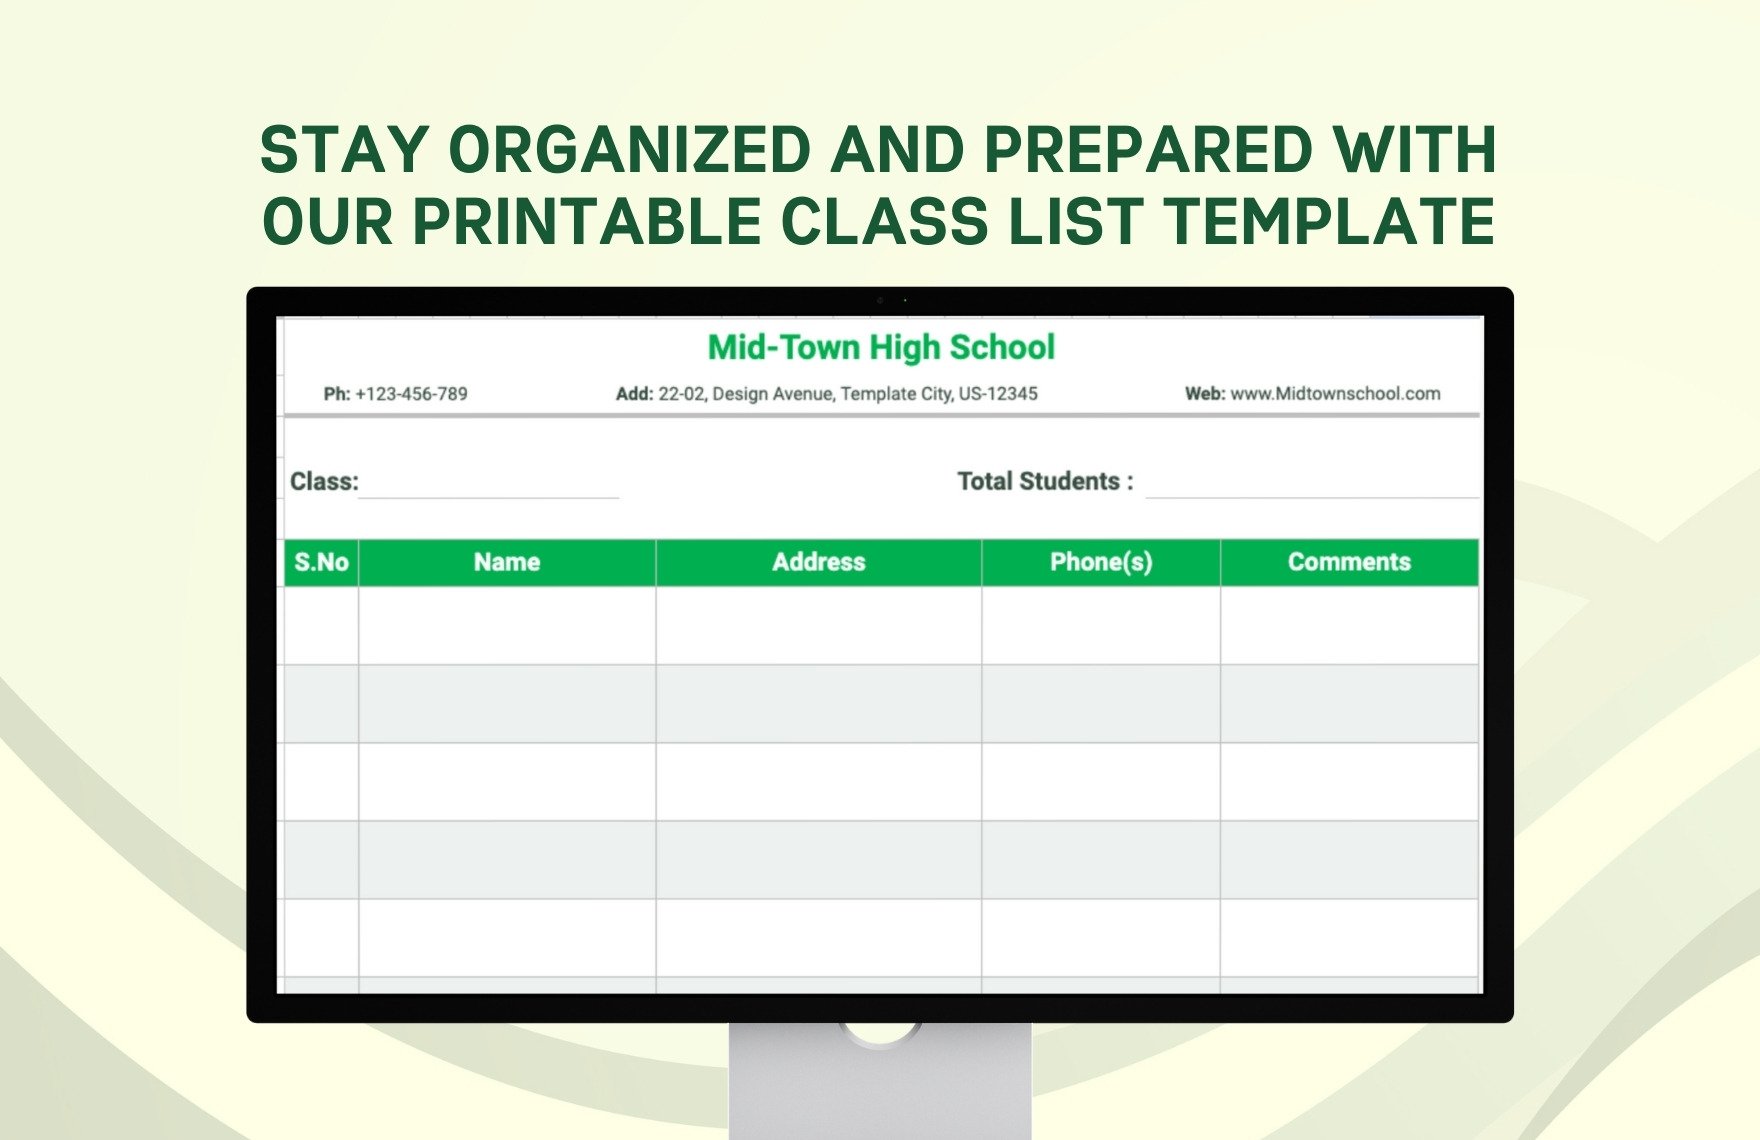 Printable Class List Template